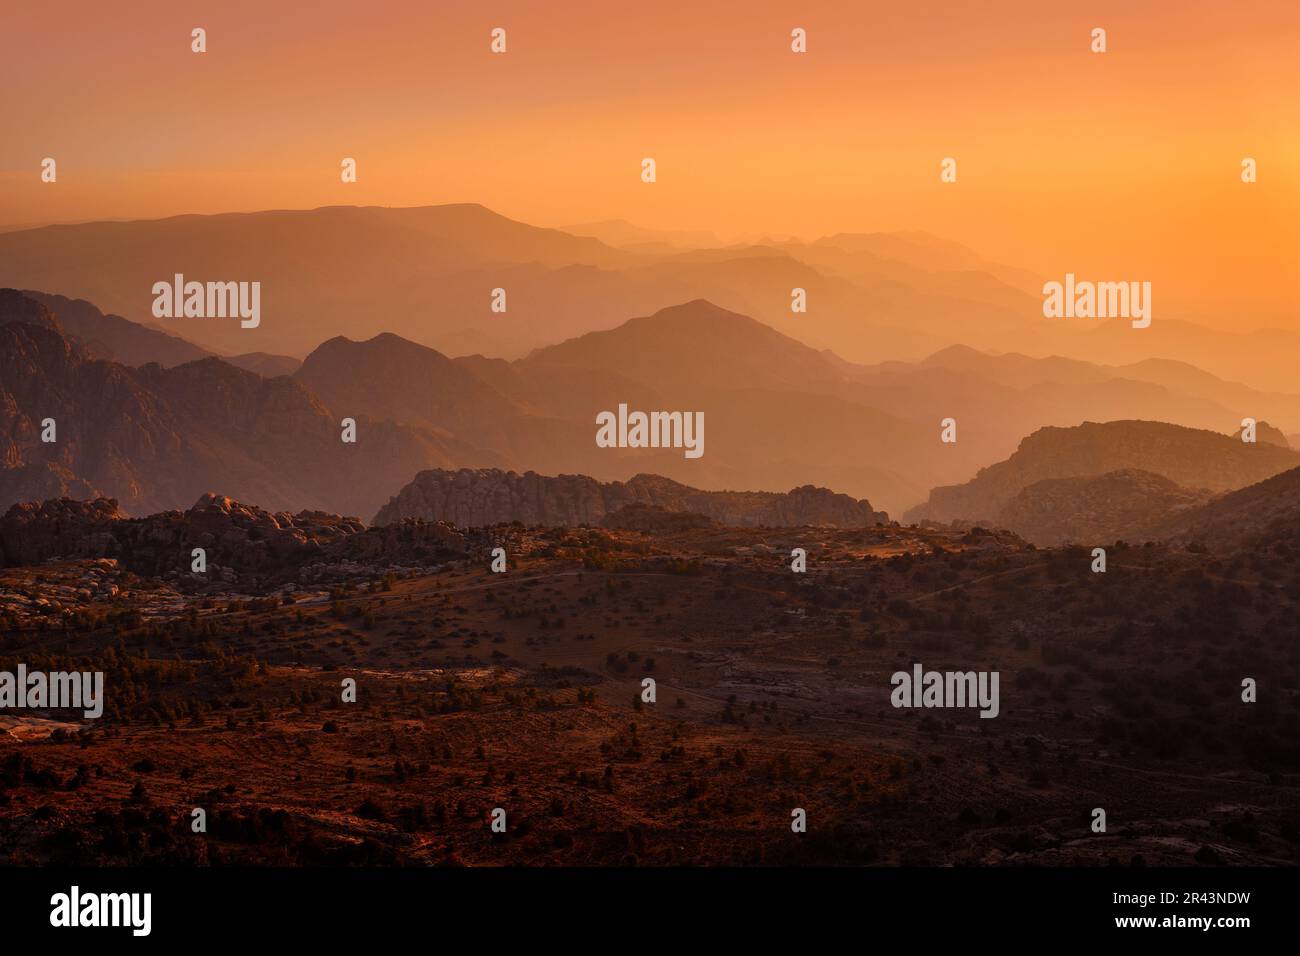 Jordan sunset landscape. Rocky mountain with orange evening in Dana Biosphere Reserve, Jorda. Traveling in Arabia. Stones and valley in Dana nature, w Stock Photo